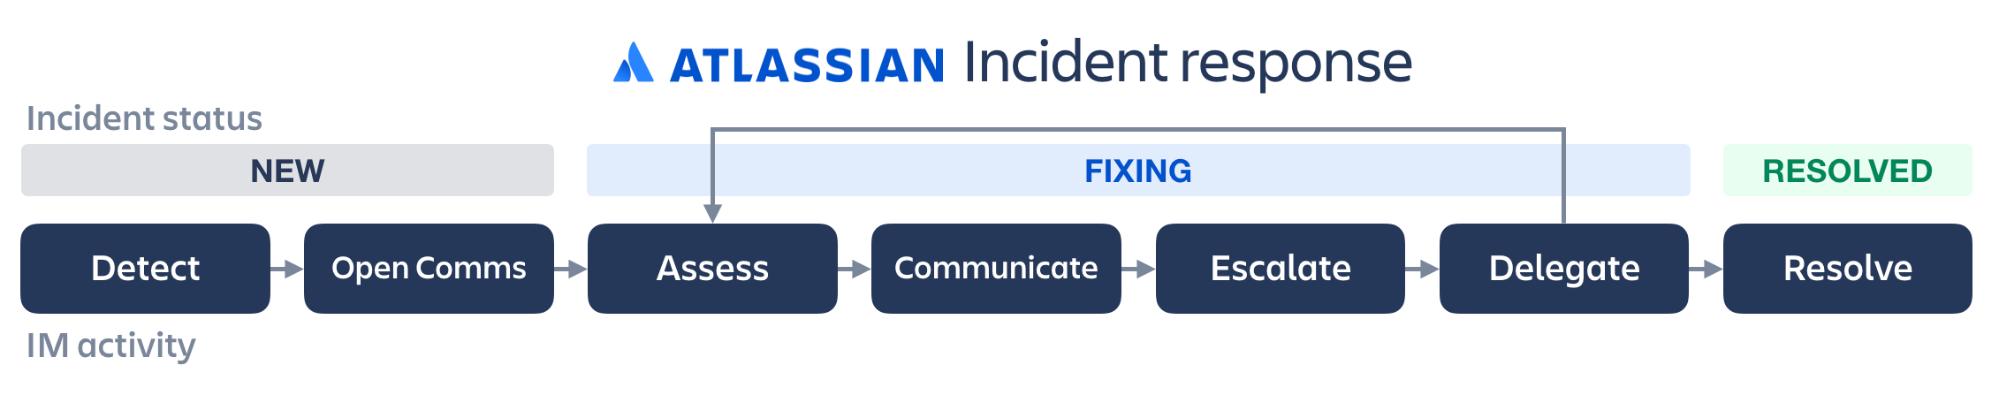 Incident response illustration : detect, open comms, assess, communicate, escalate, delegate, resolve